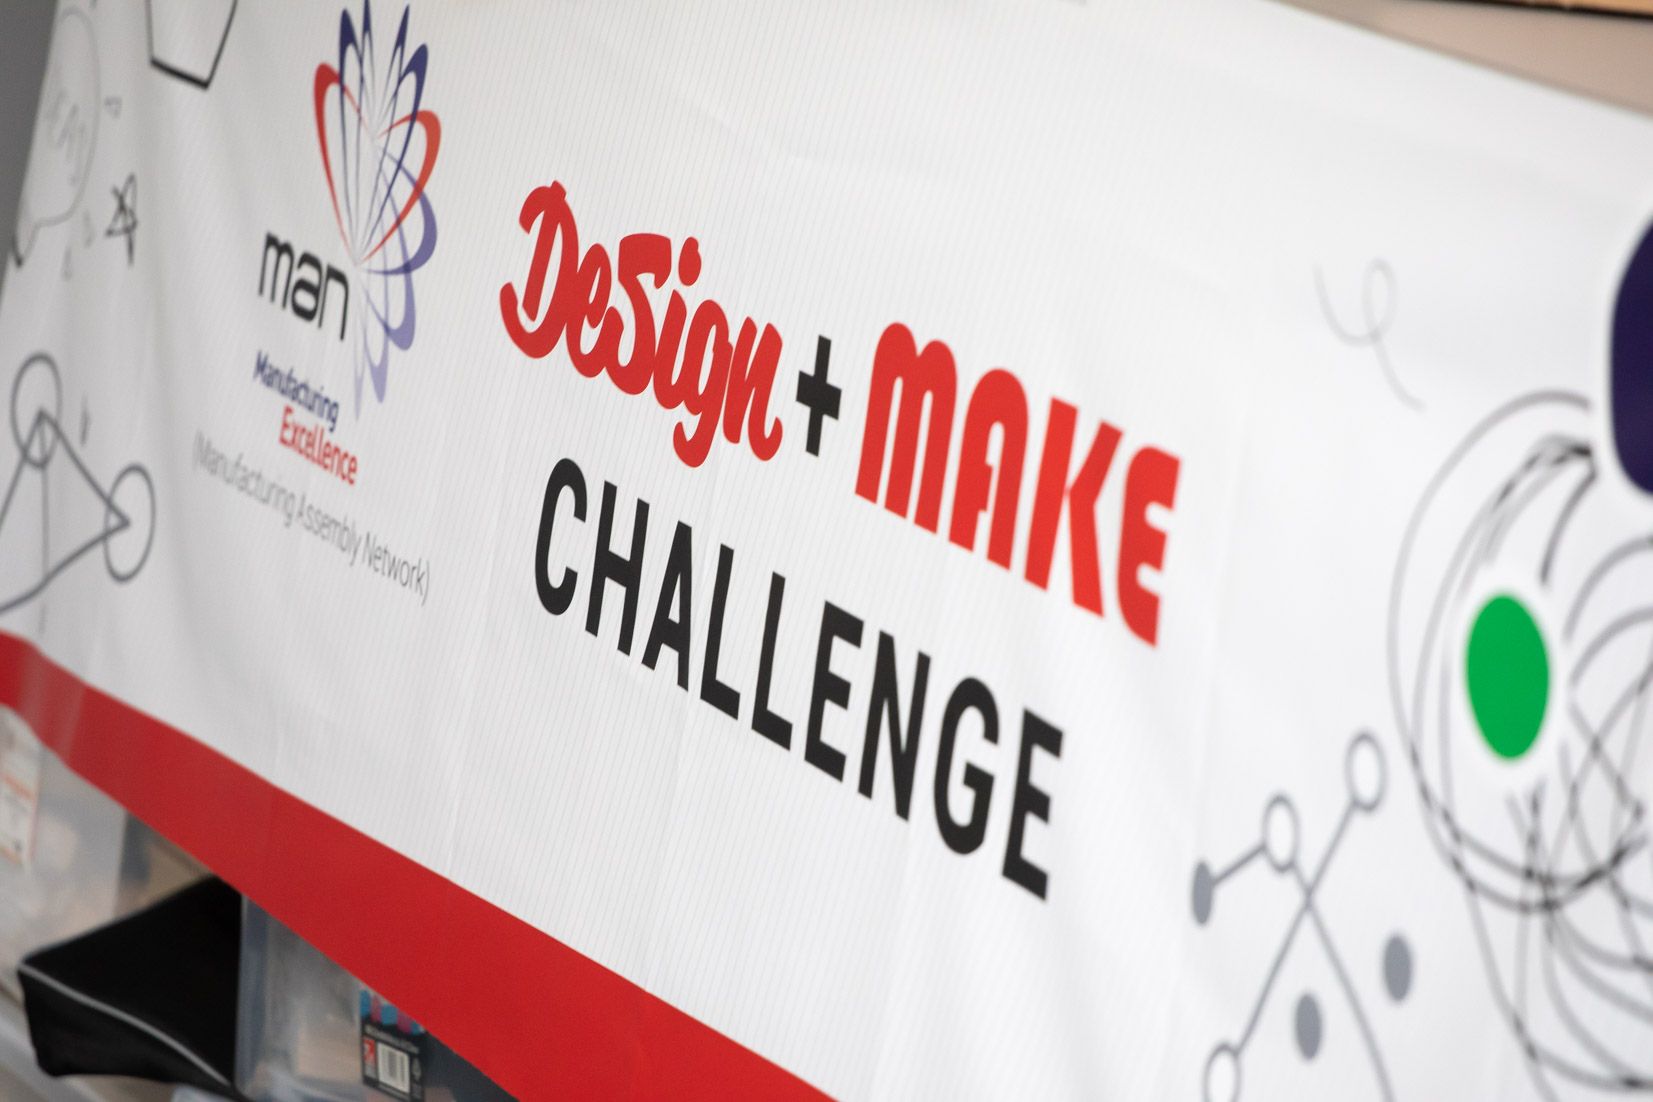 design & make challenge